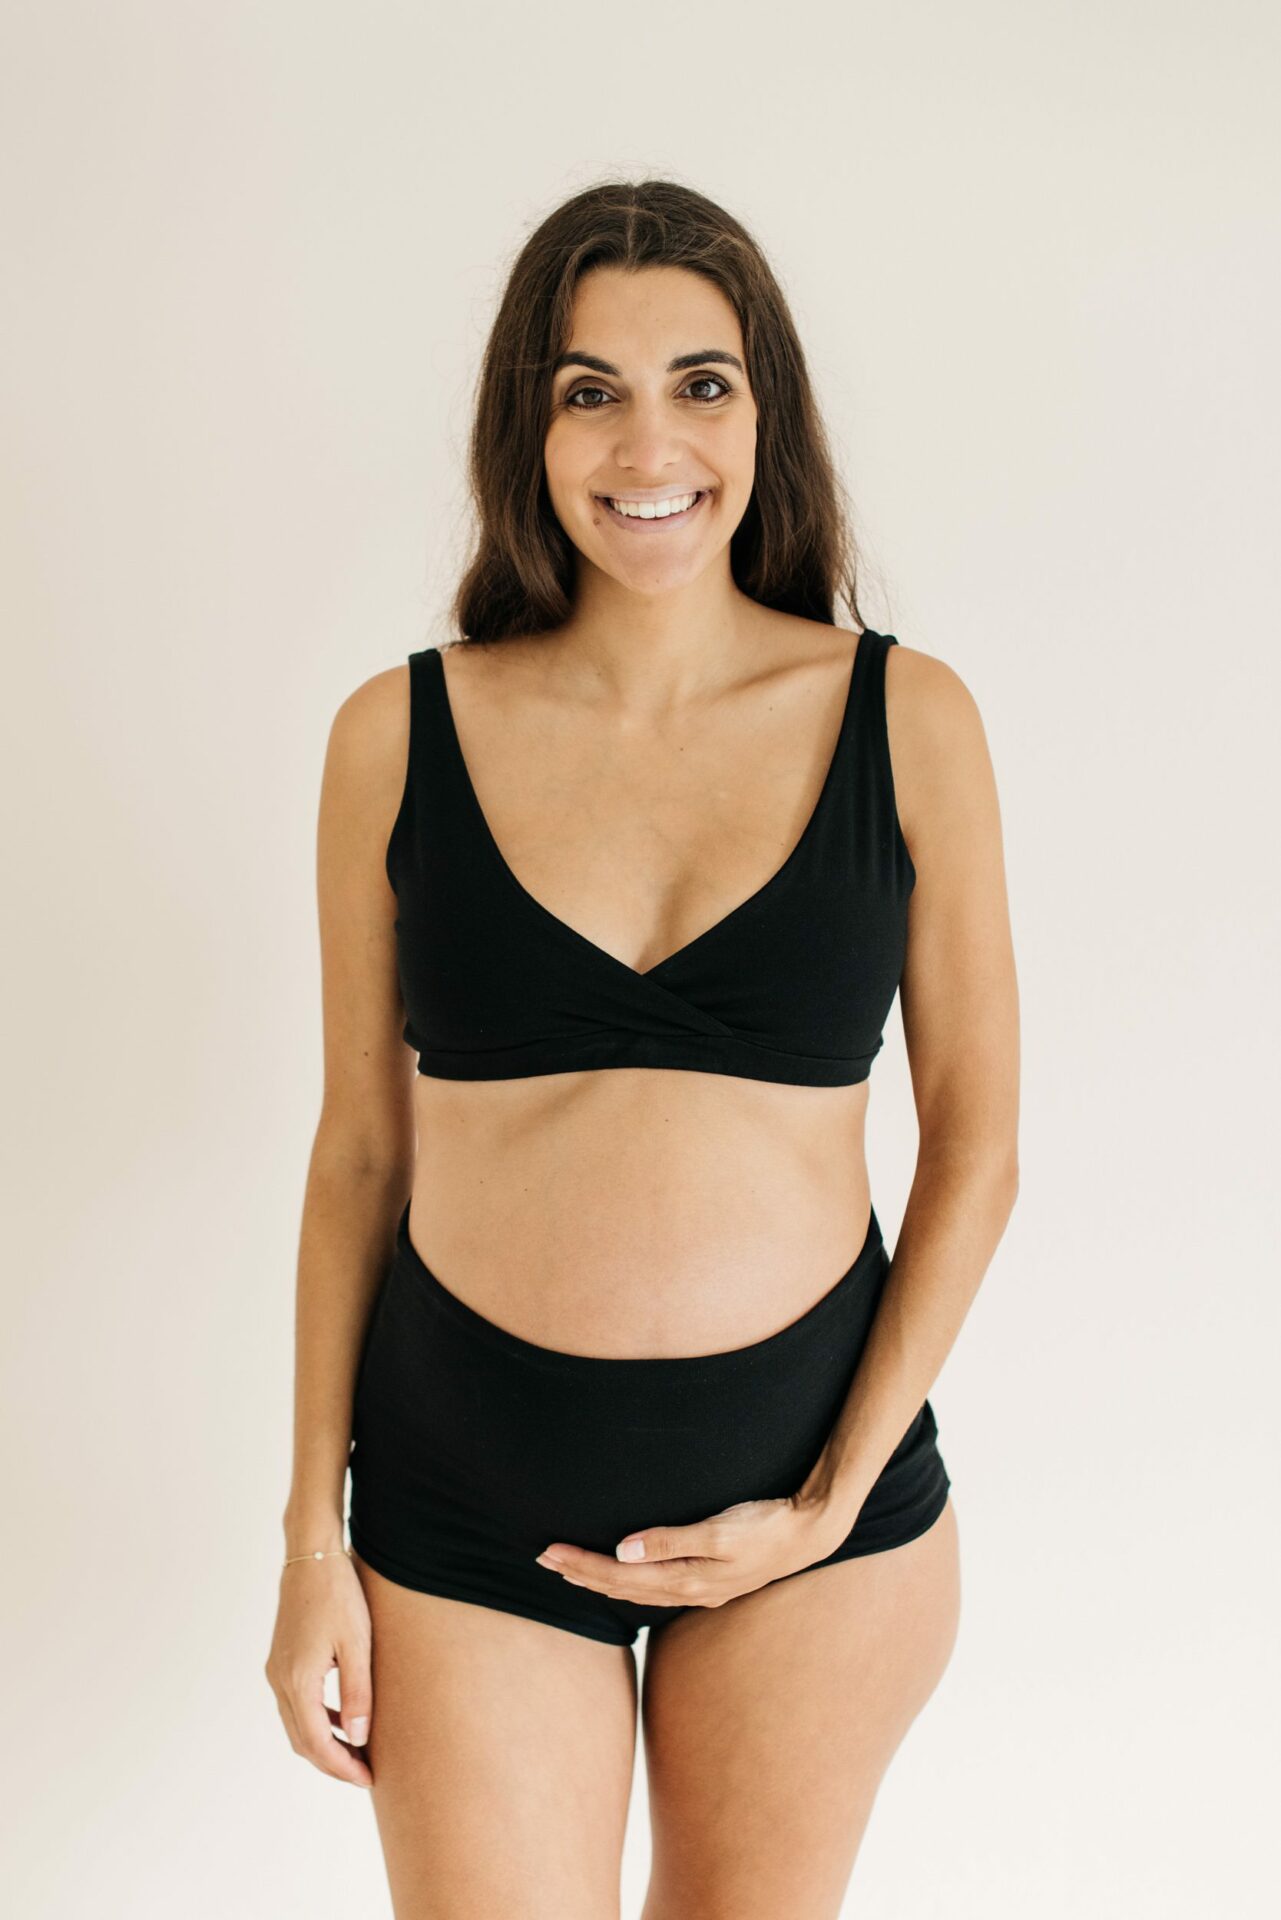 Womens Clothes Clearance Black and Friday Deals 2023 asdoklhq Sports Bras  for Women,Feeding Nursing Pregnant Maternity Bra Breastfeeding Underwear